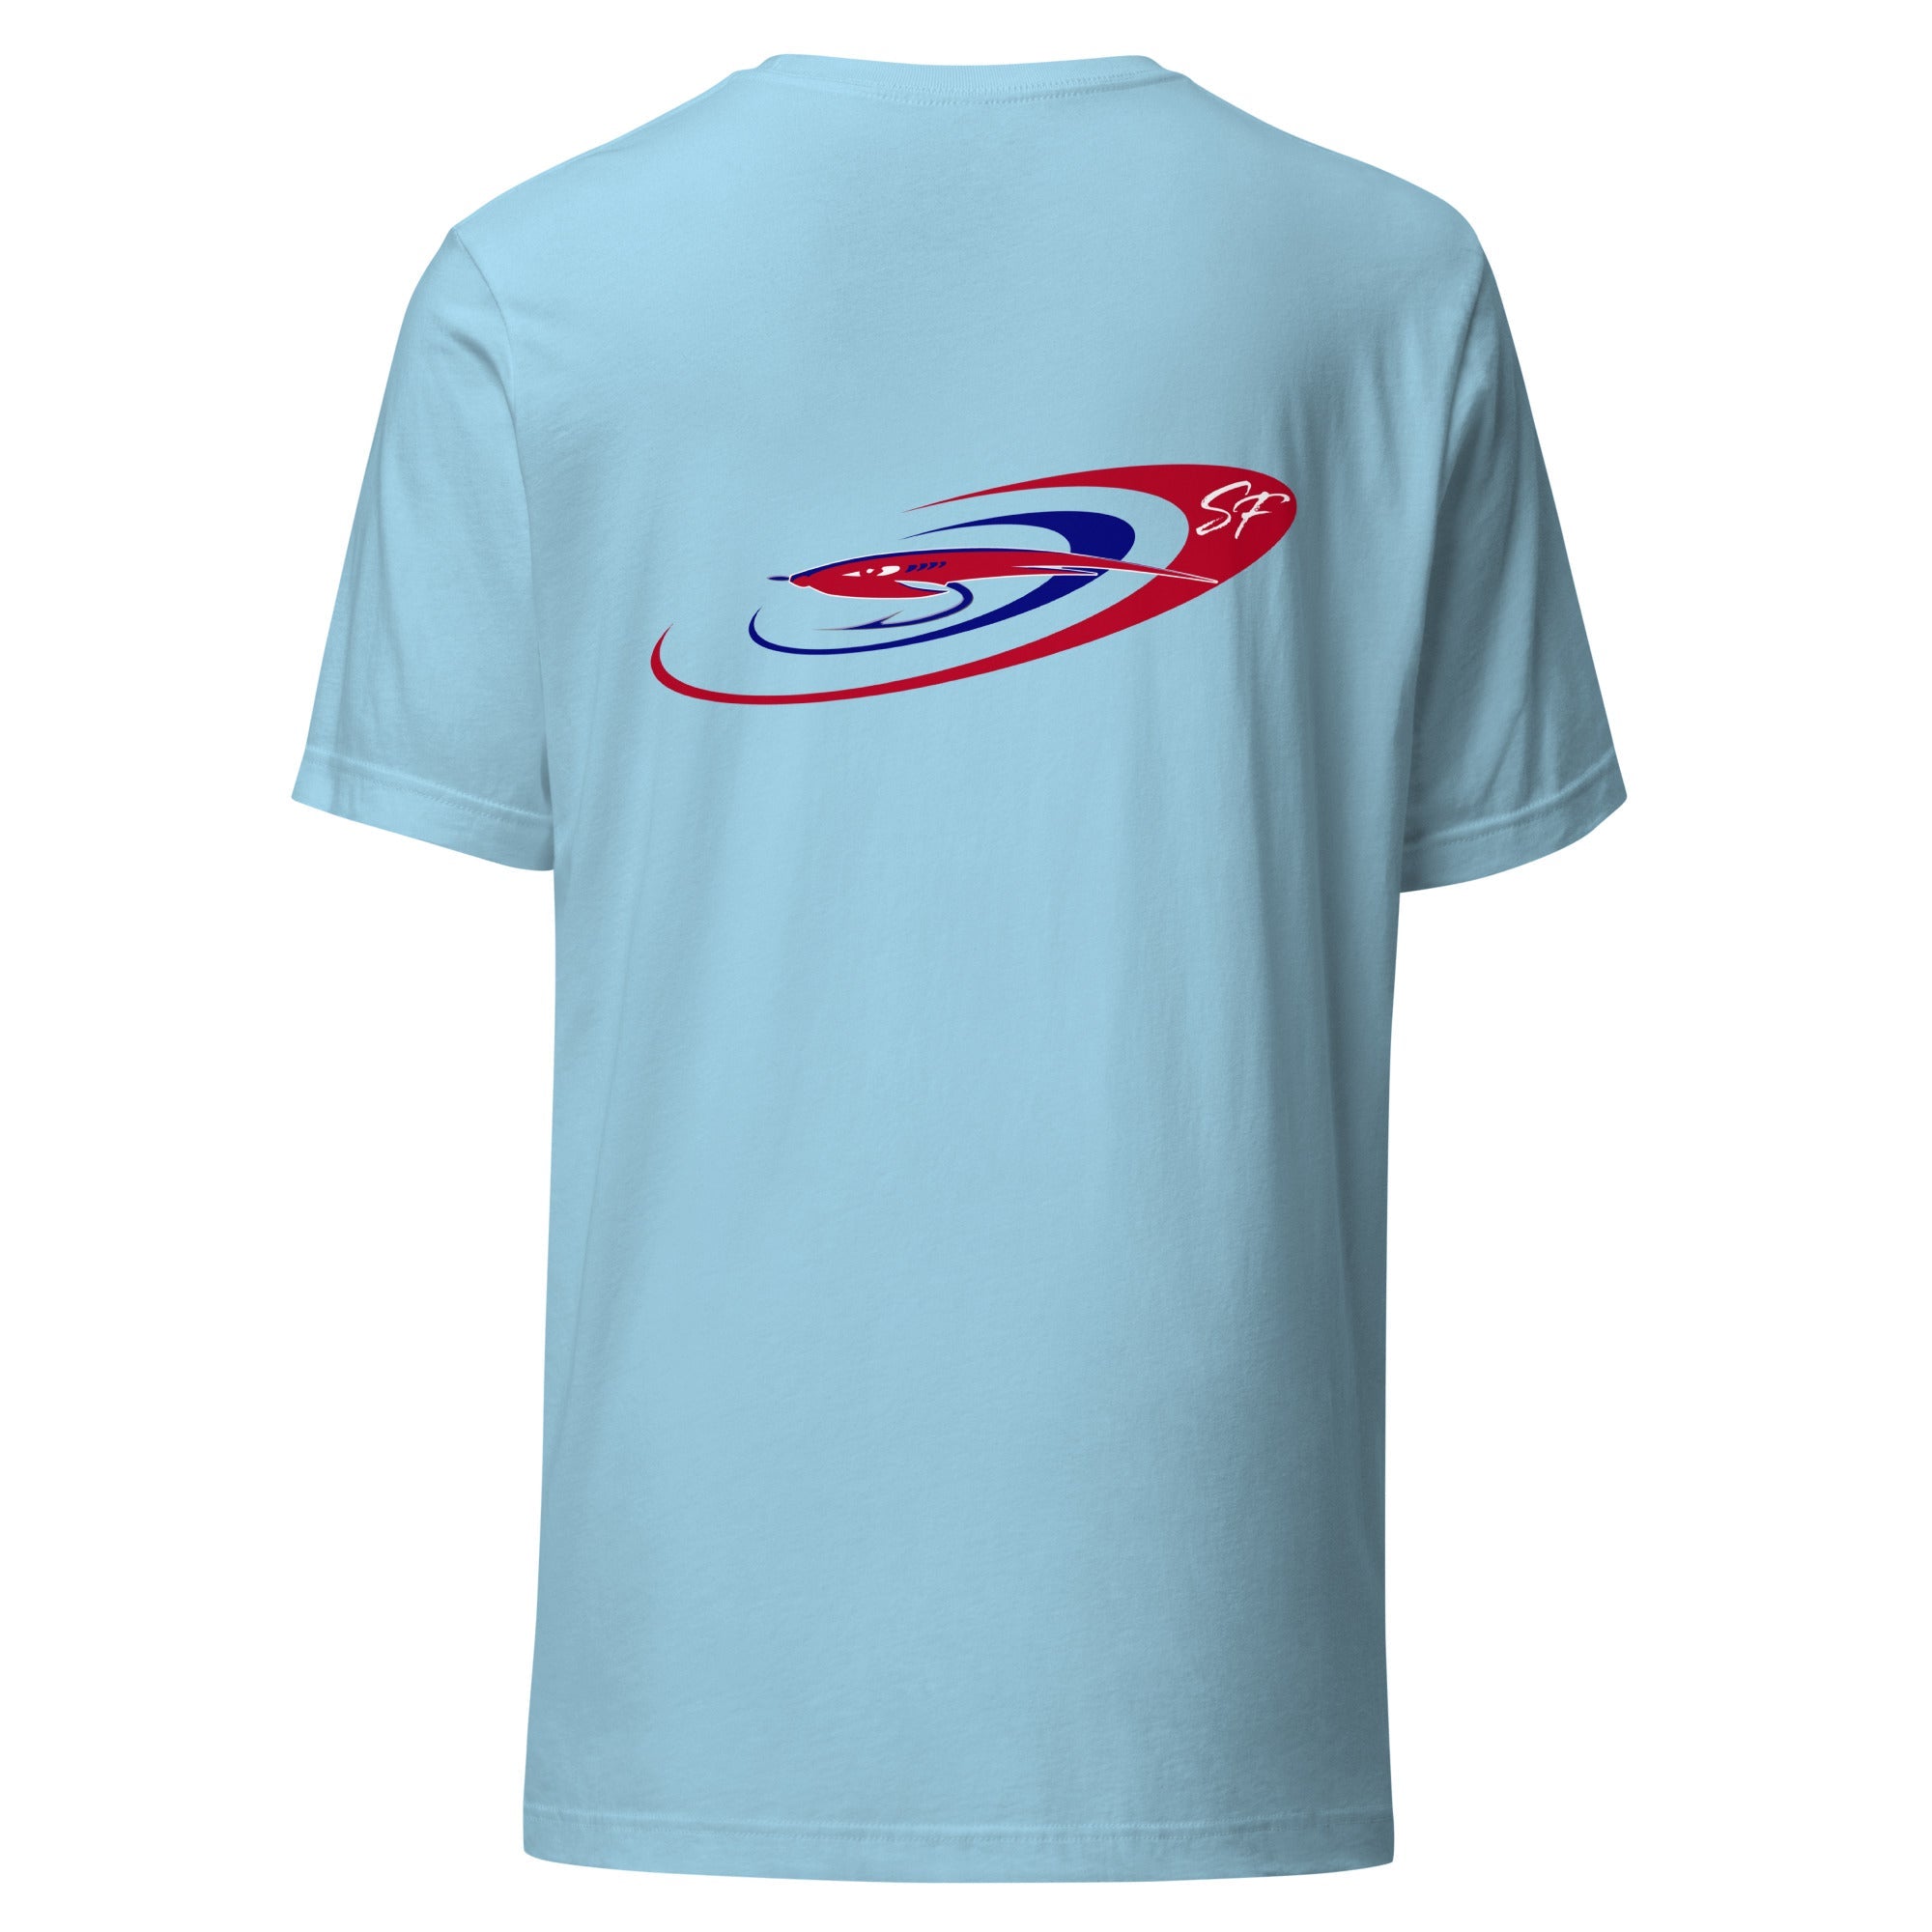 unisex-staple-t-shirt-ocean-blue-back-647a3c79bfd38_a2b6d266-711a-41e0-9c20-8e6909a4d1a8.jpg